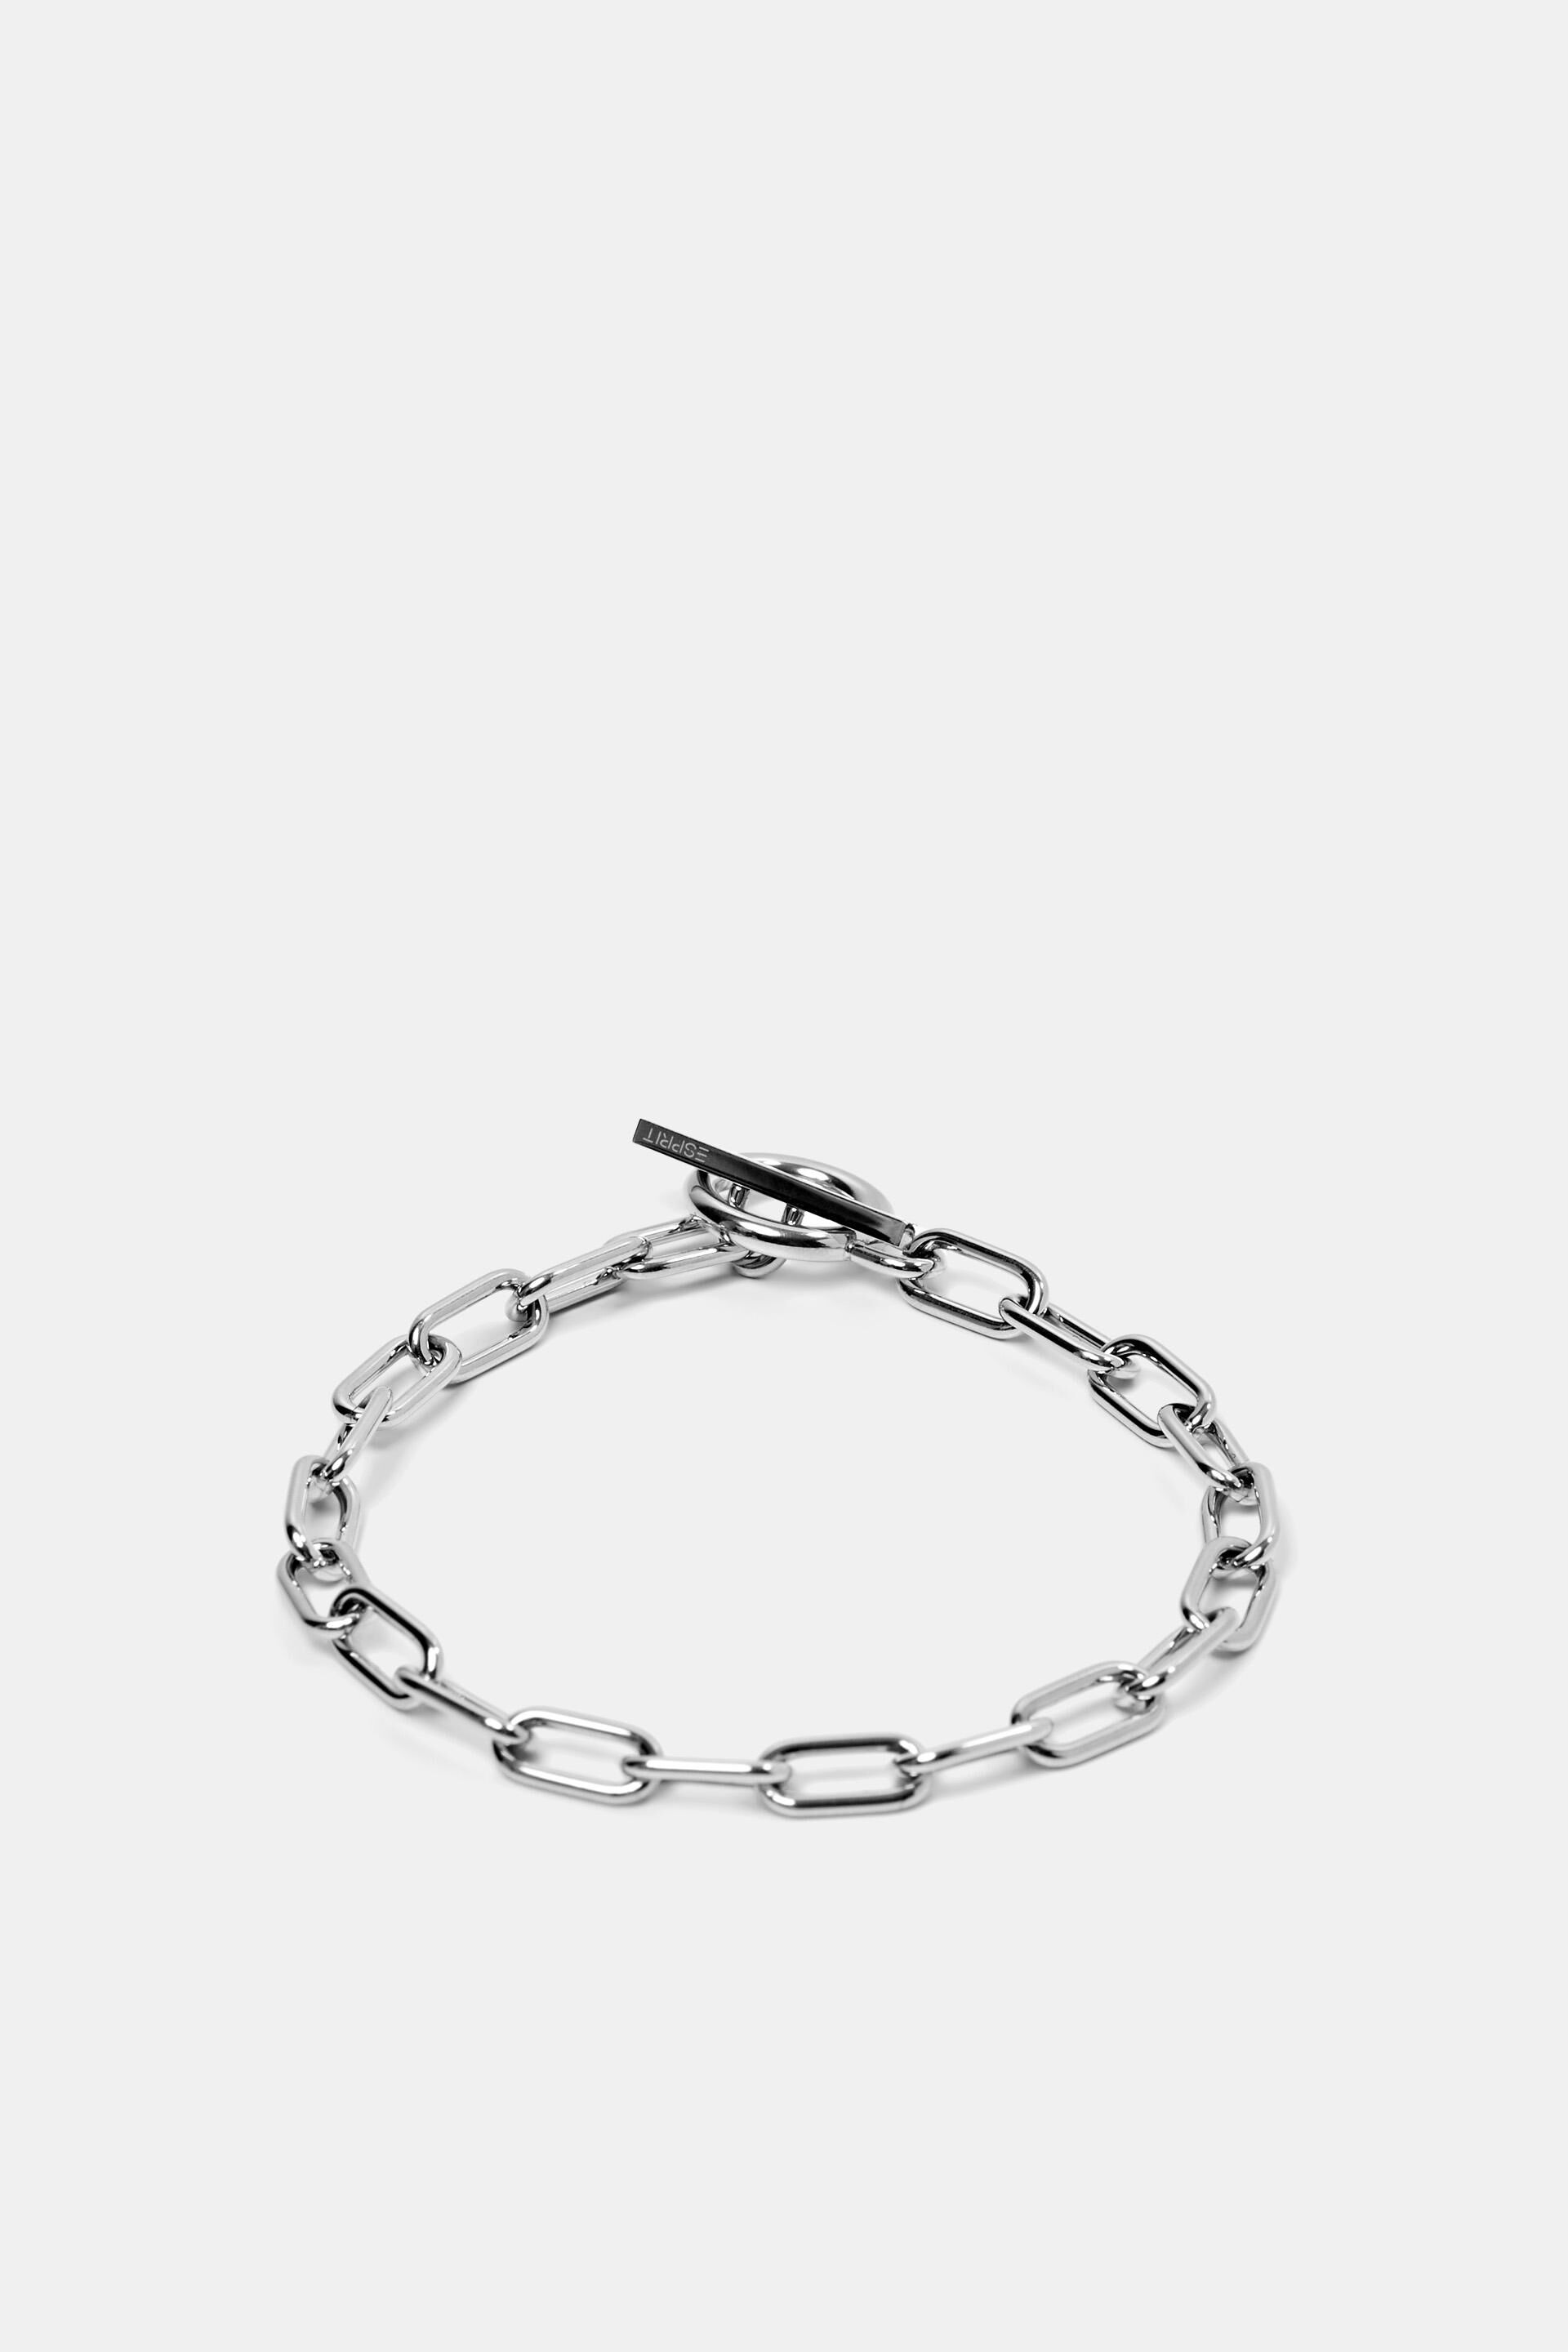 Esprit bracelet, Chain steel stainless